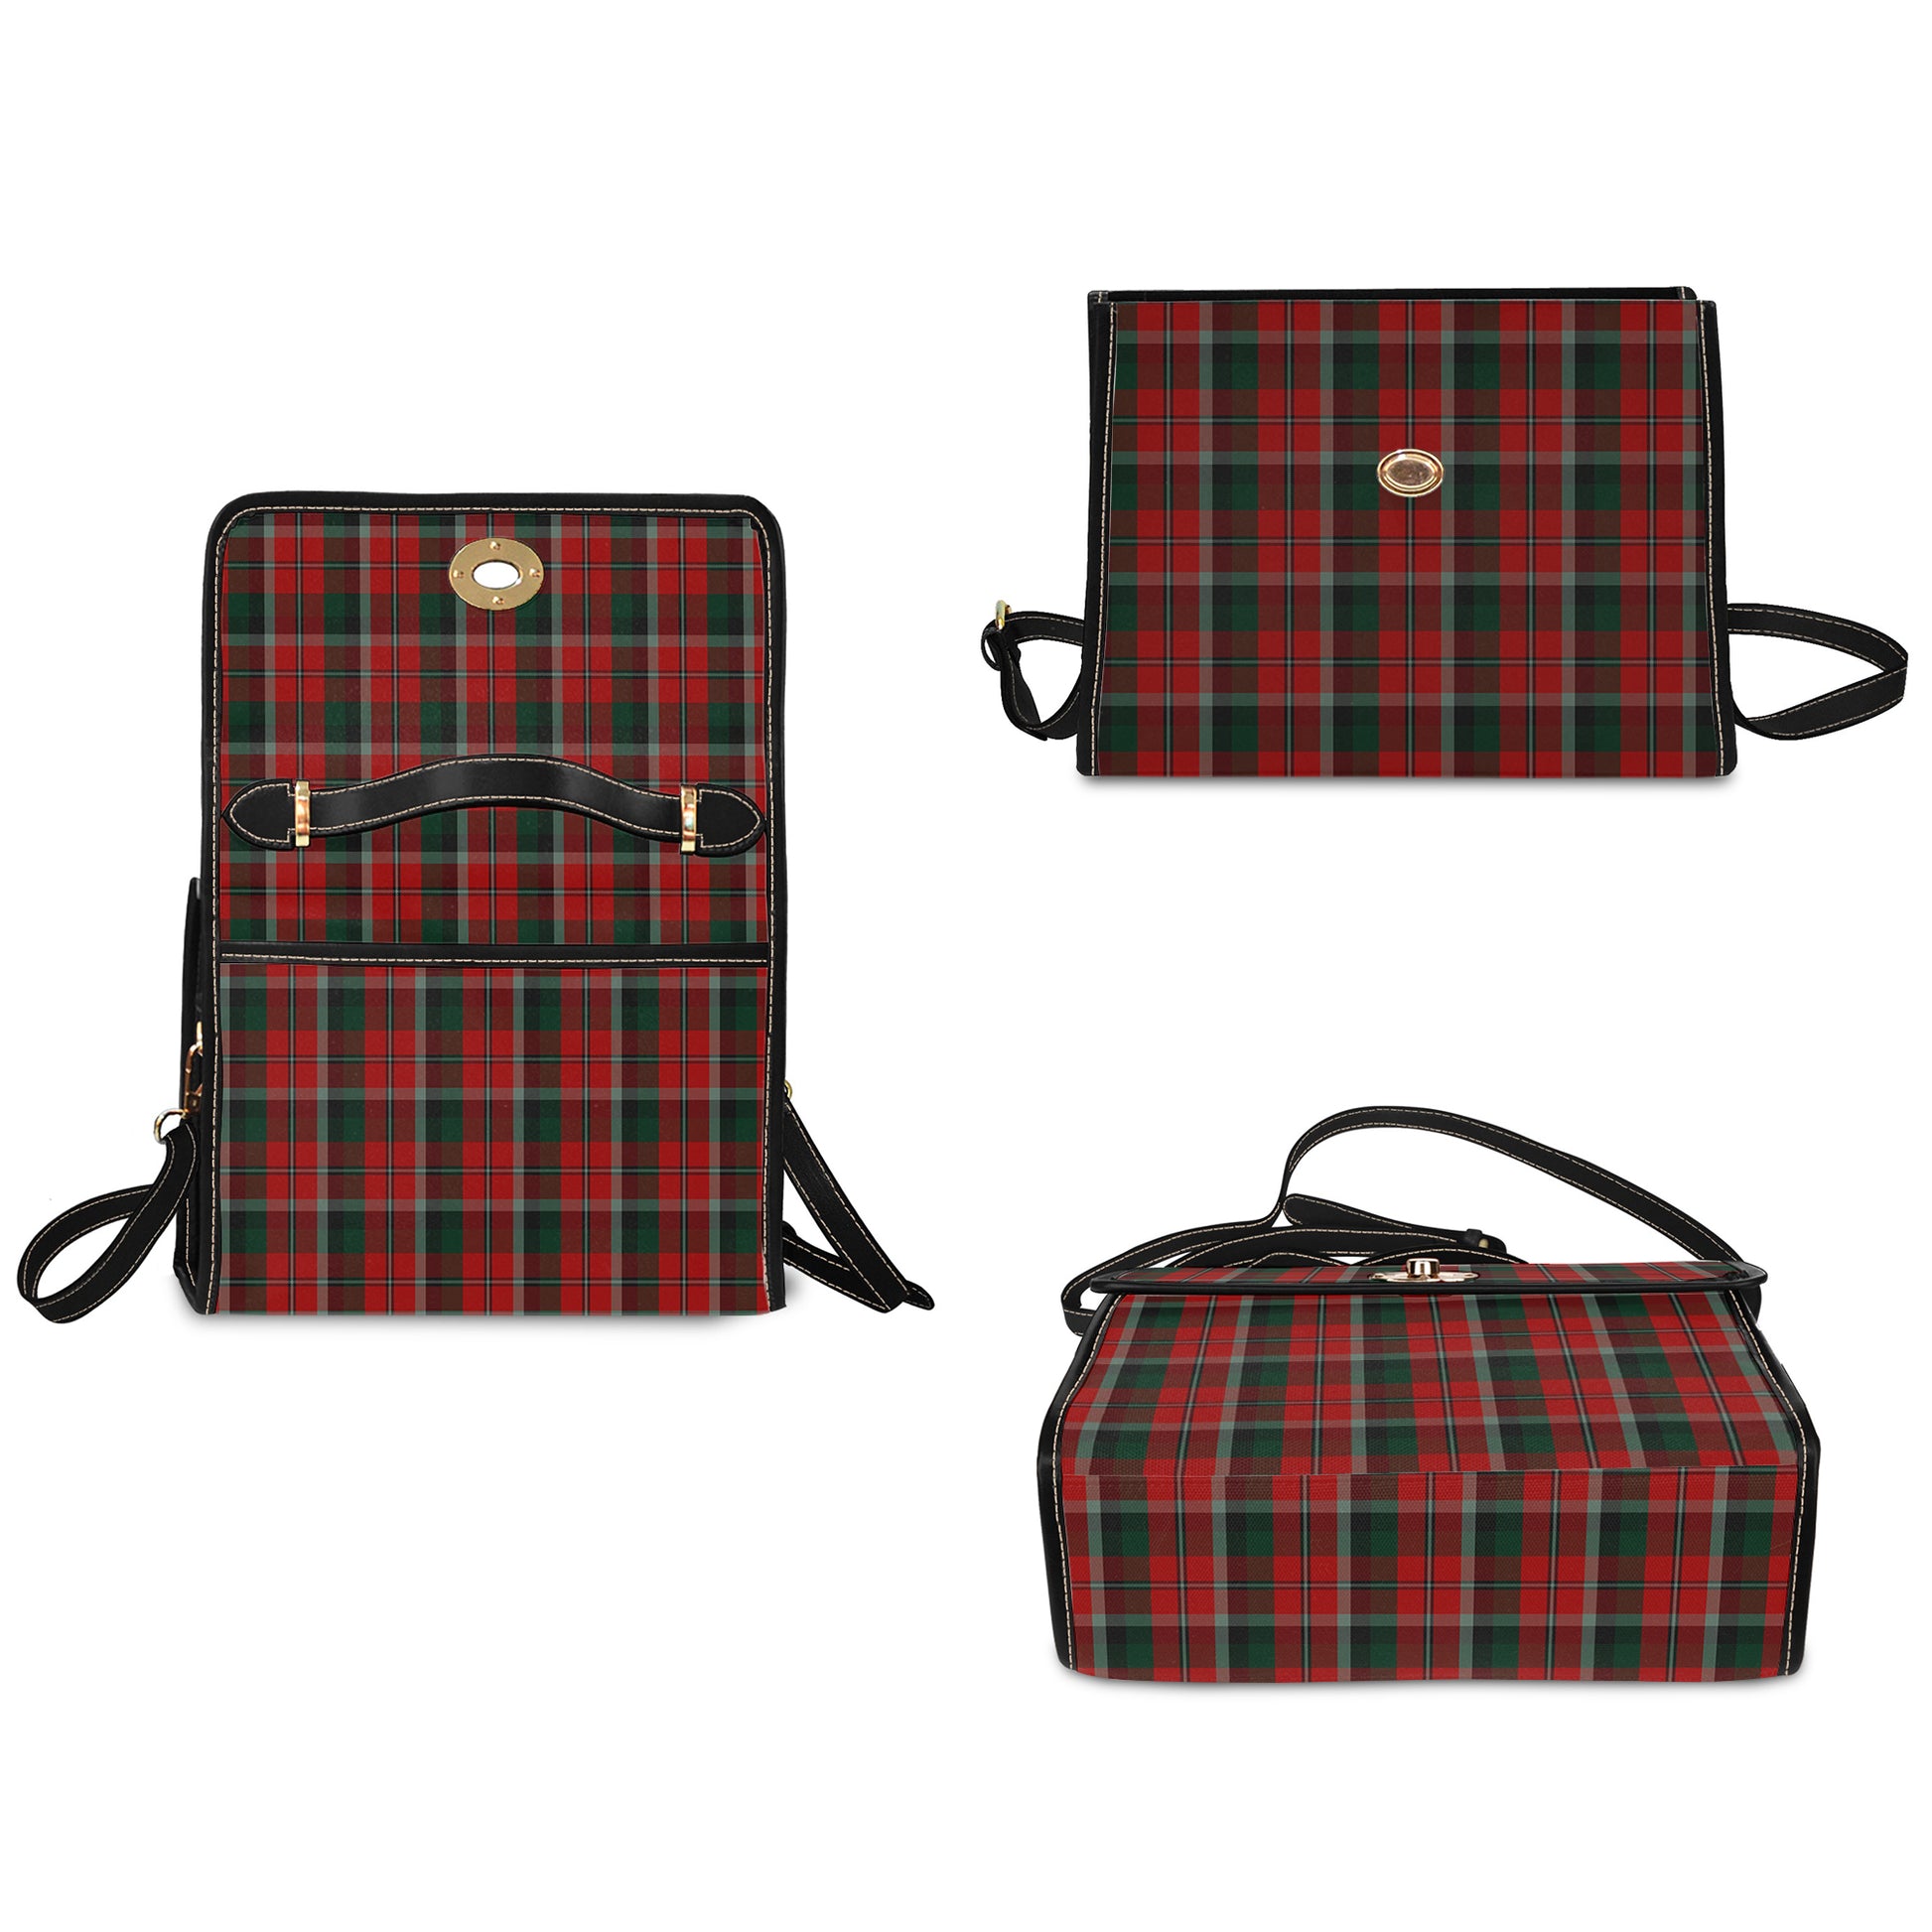 montrose-tartan-leather-strap-waterproof-canvas-bag